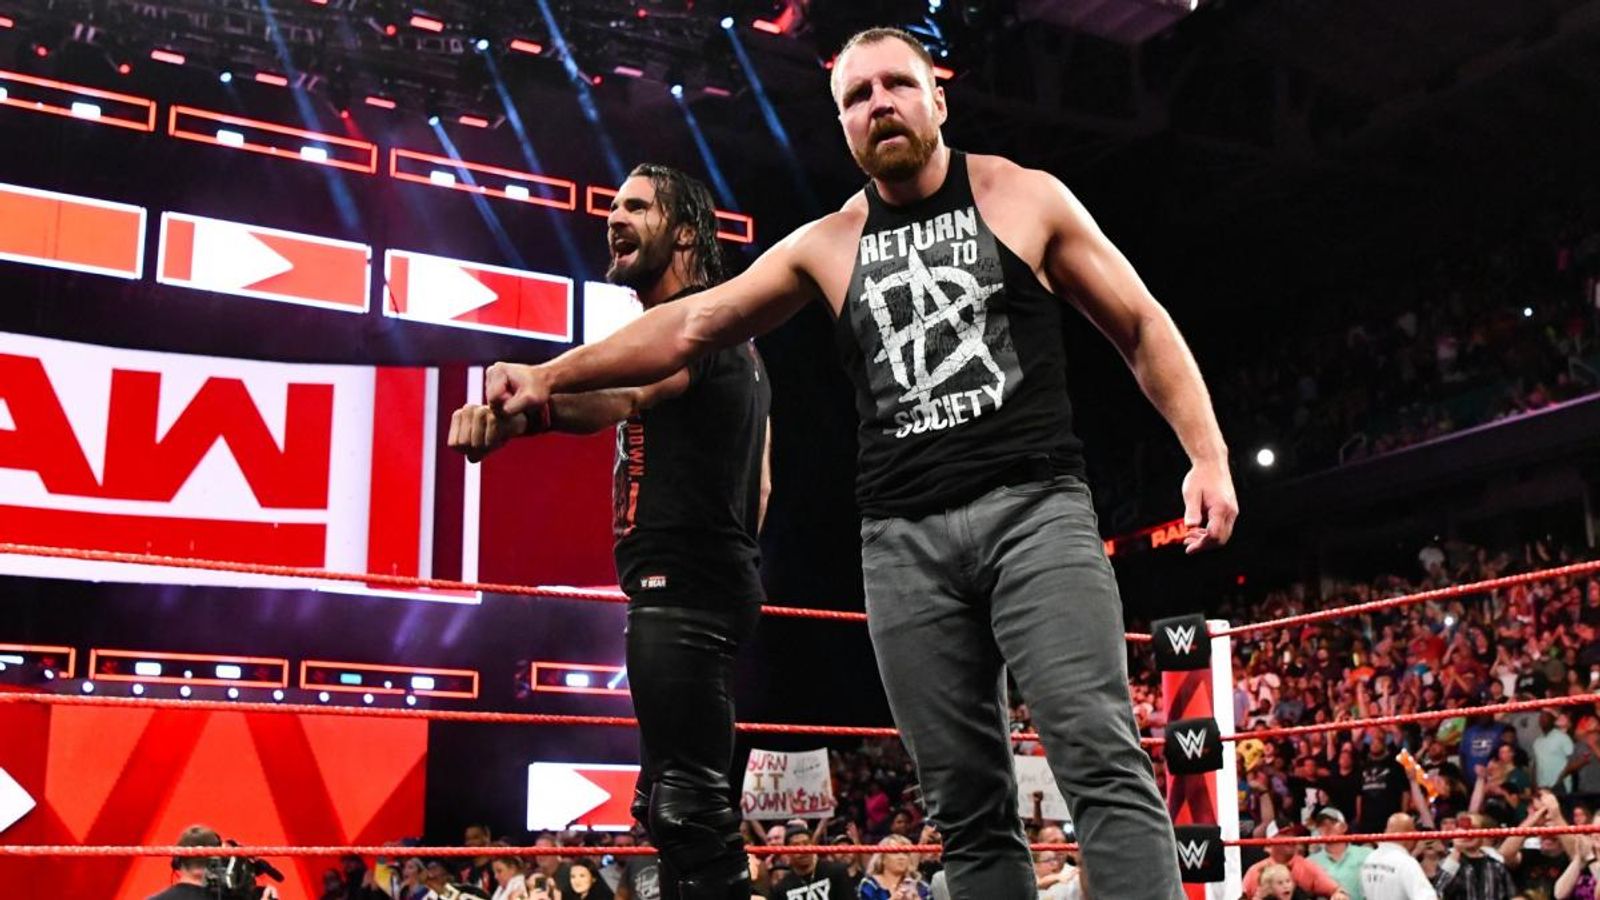 WWE Raw Dean Ambrose makes shock return after lengthy injury layoff